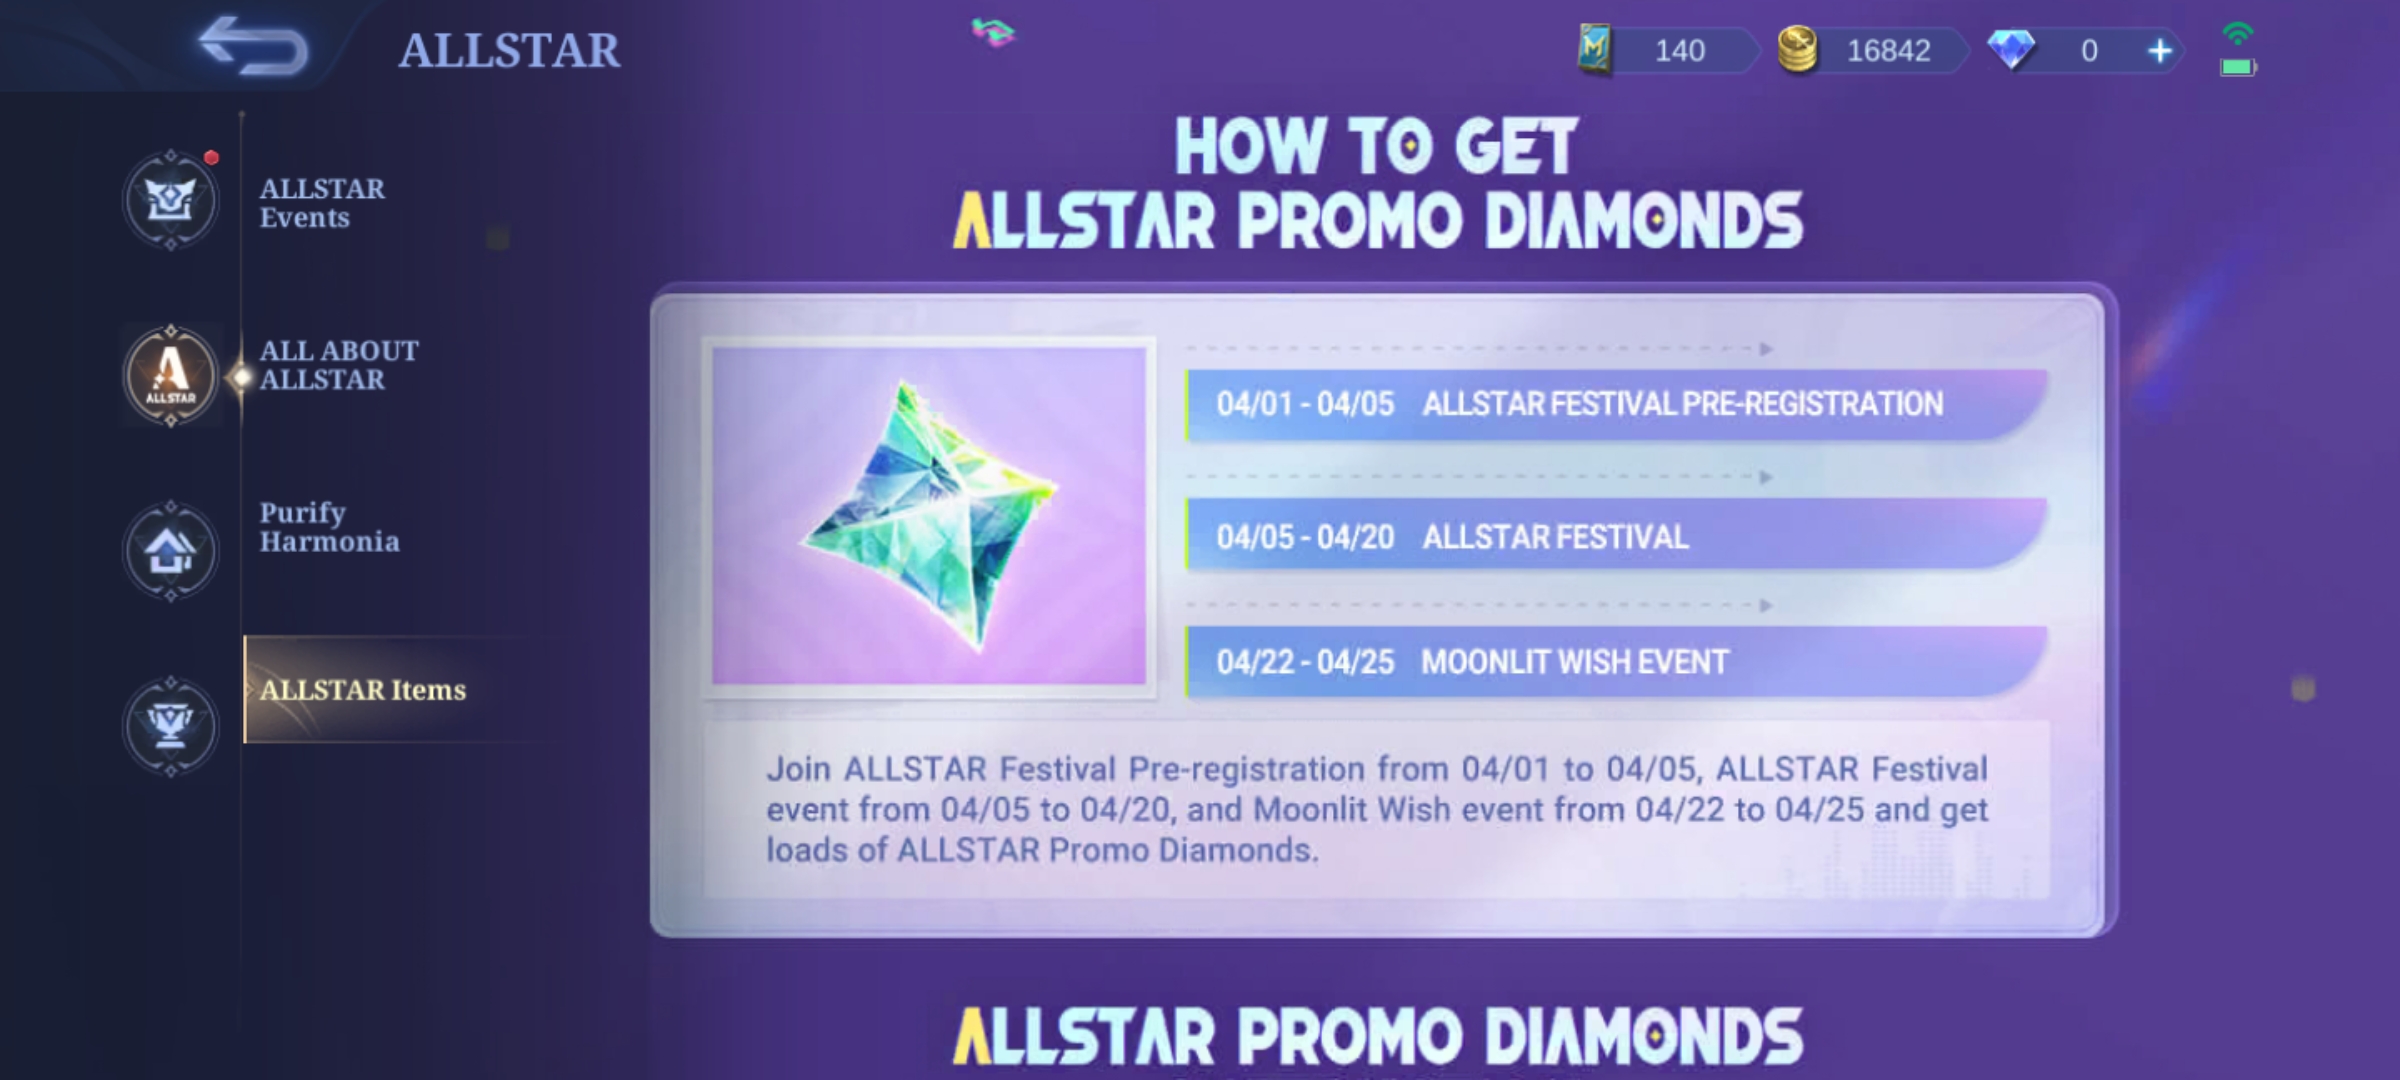 MLBB How to get Promo Diamonds